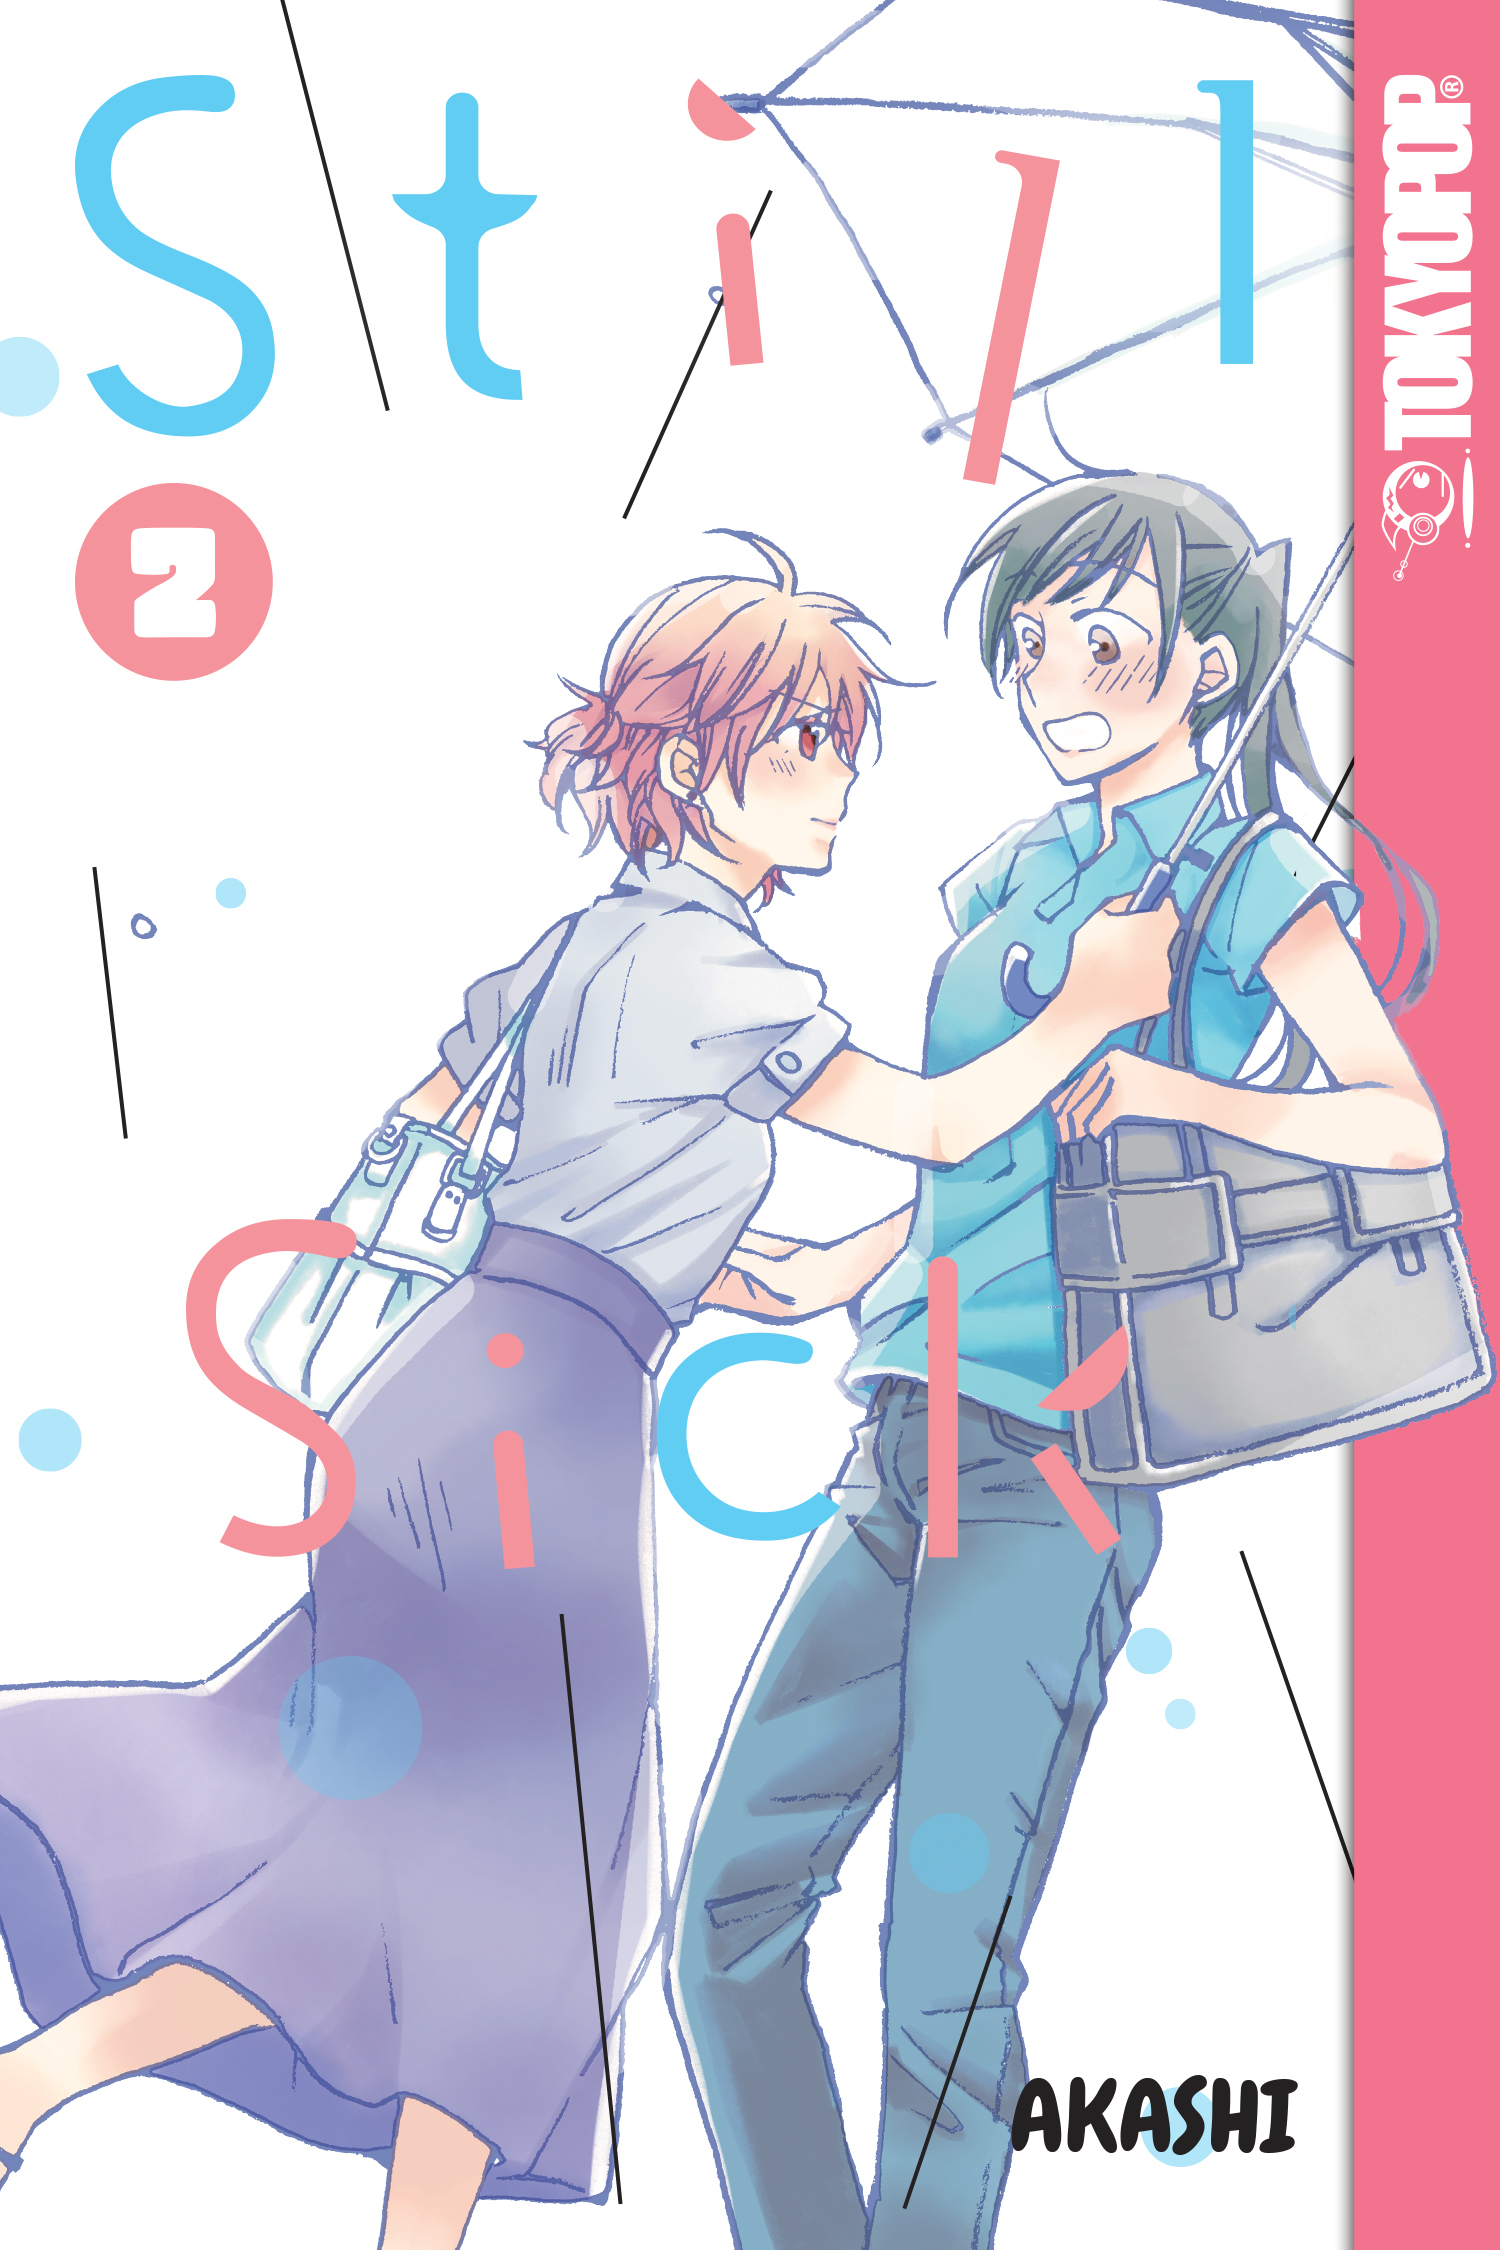 Still Sick Manga Manga Volume 2 (Of 3)